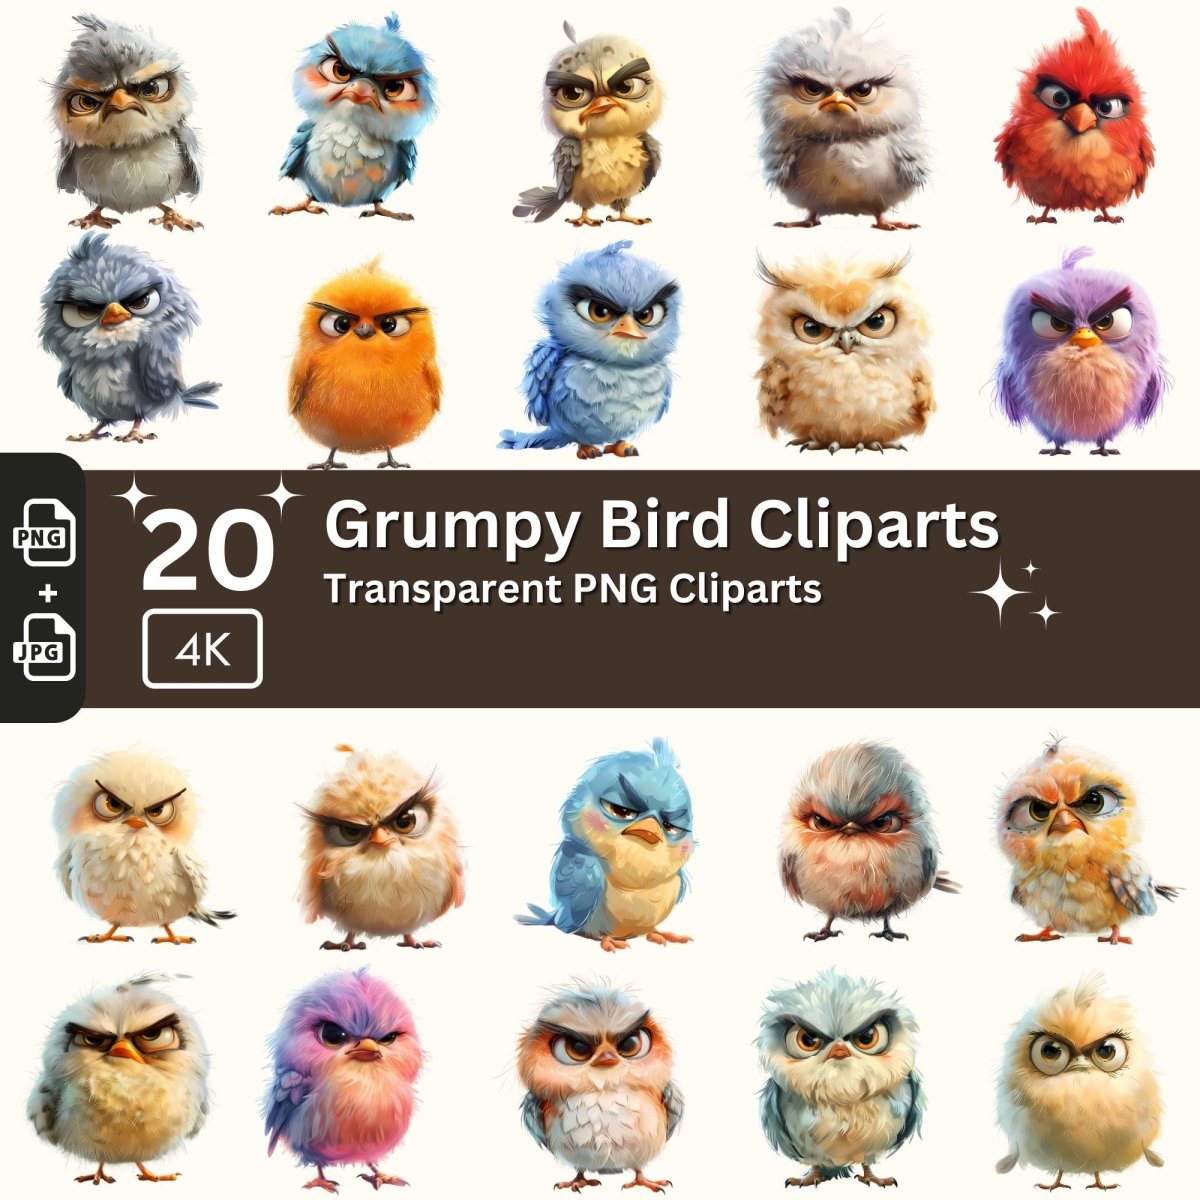 Grumpy Bird Clipart Collection - 20 Transparent PNGs - Funny Cartoon Bird Illustrations - Everything Pixel